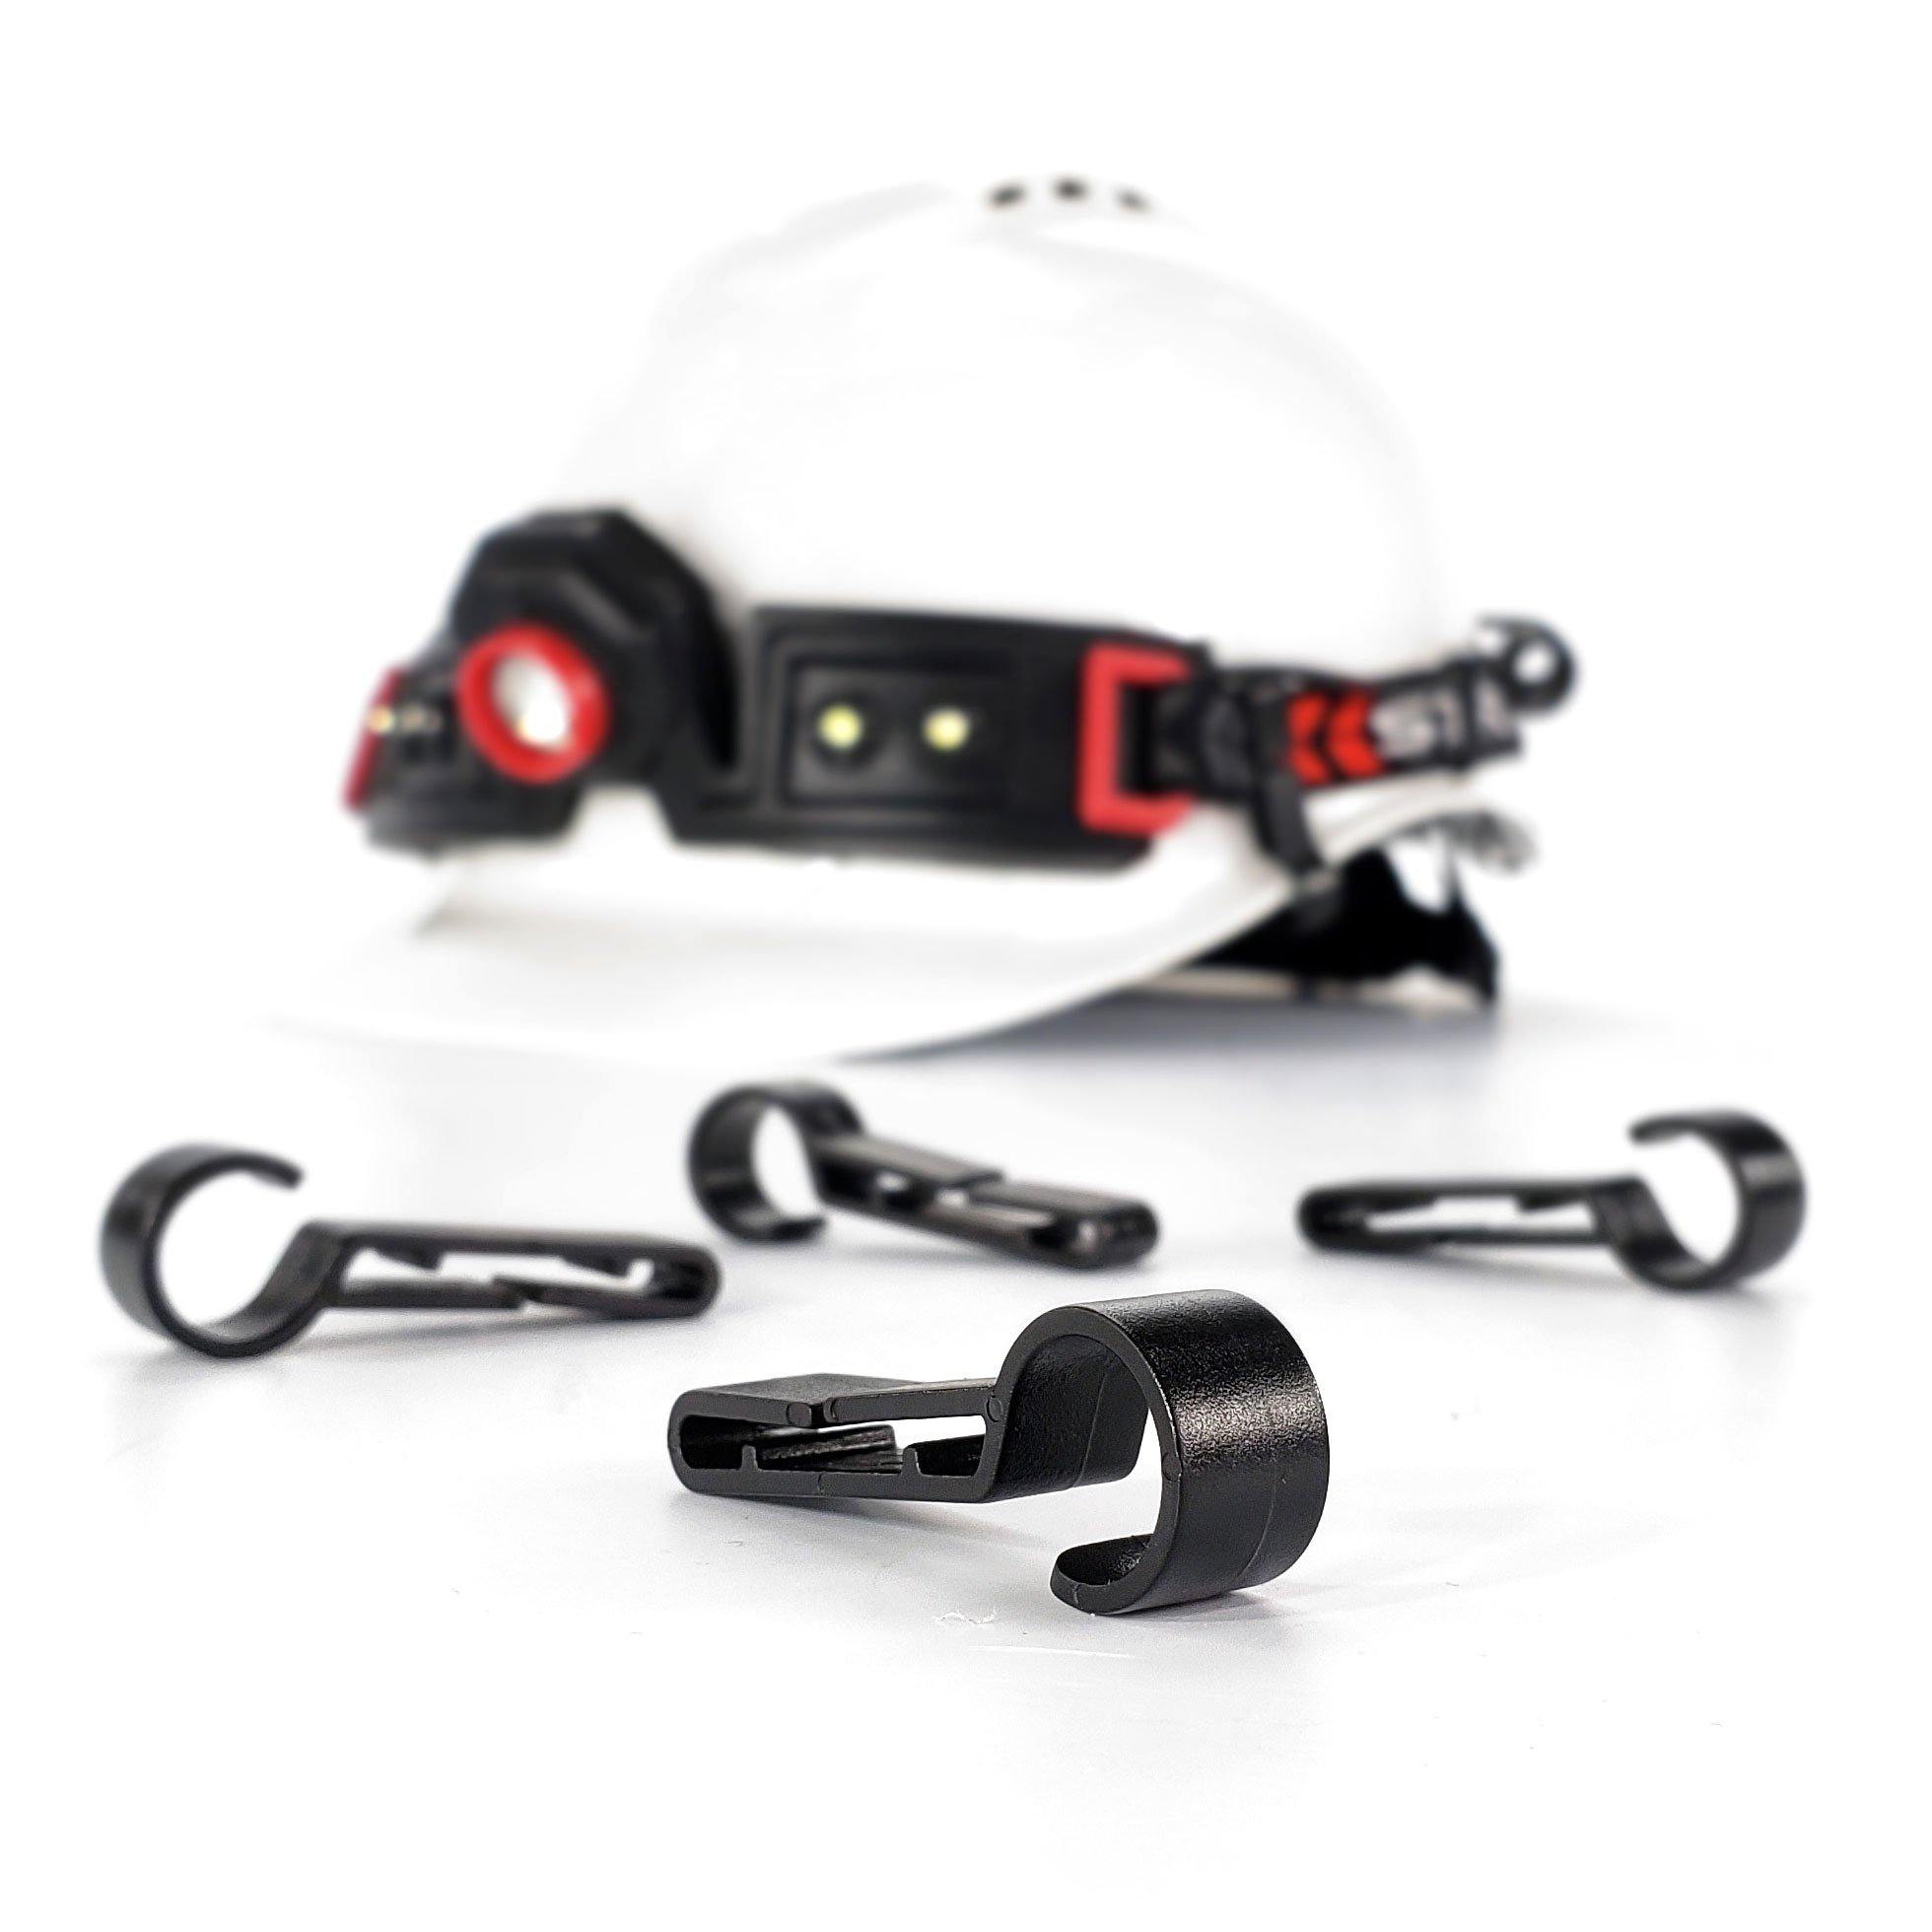 Headlamp Helmet Clips 4 pack - Mount Headlamp to helmets and hard hats | STKR Concepts - striker